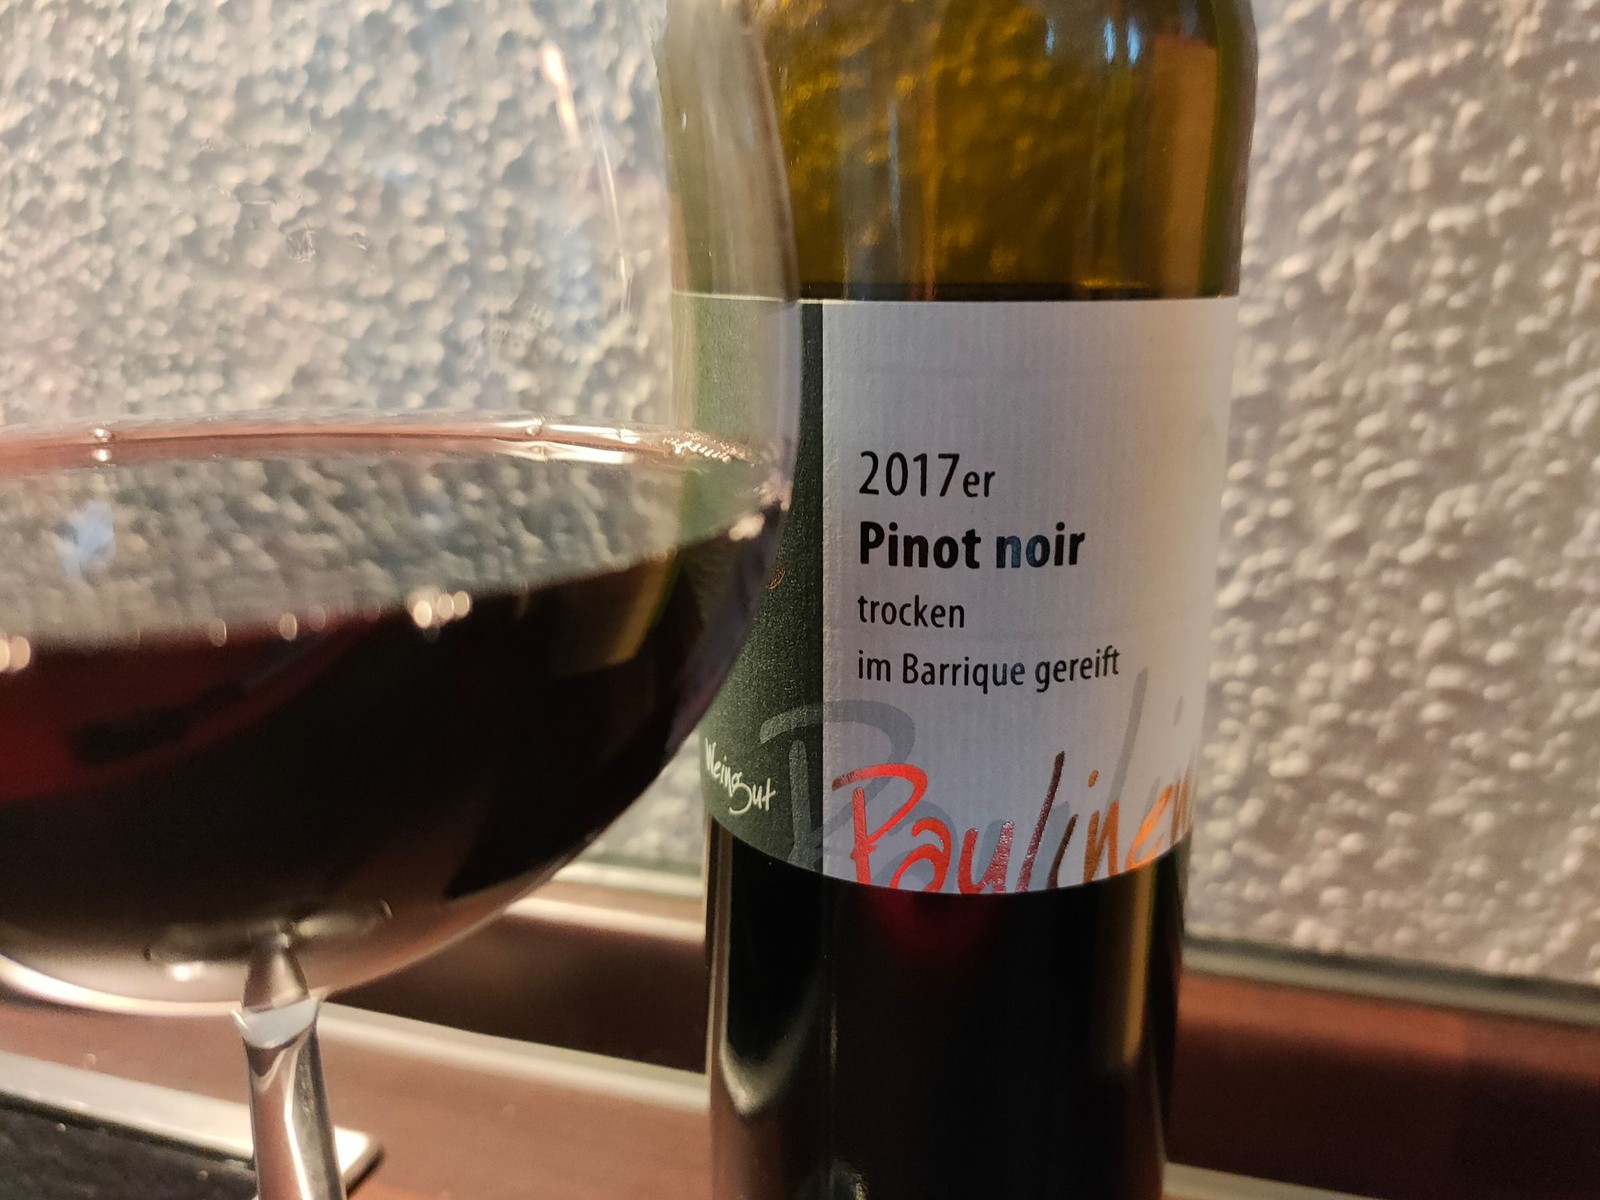 2017er Pinot noir trocken, im Barrique gereift - vom Weingut Paulinenhof in Selzen